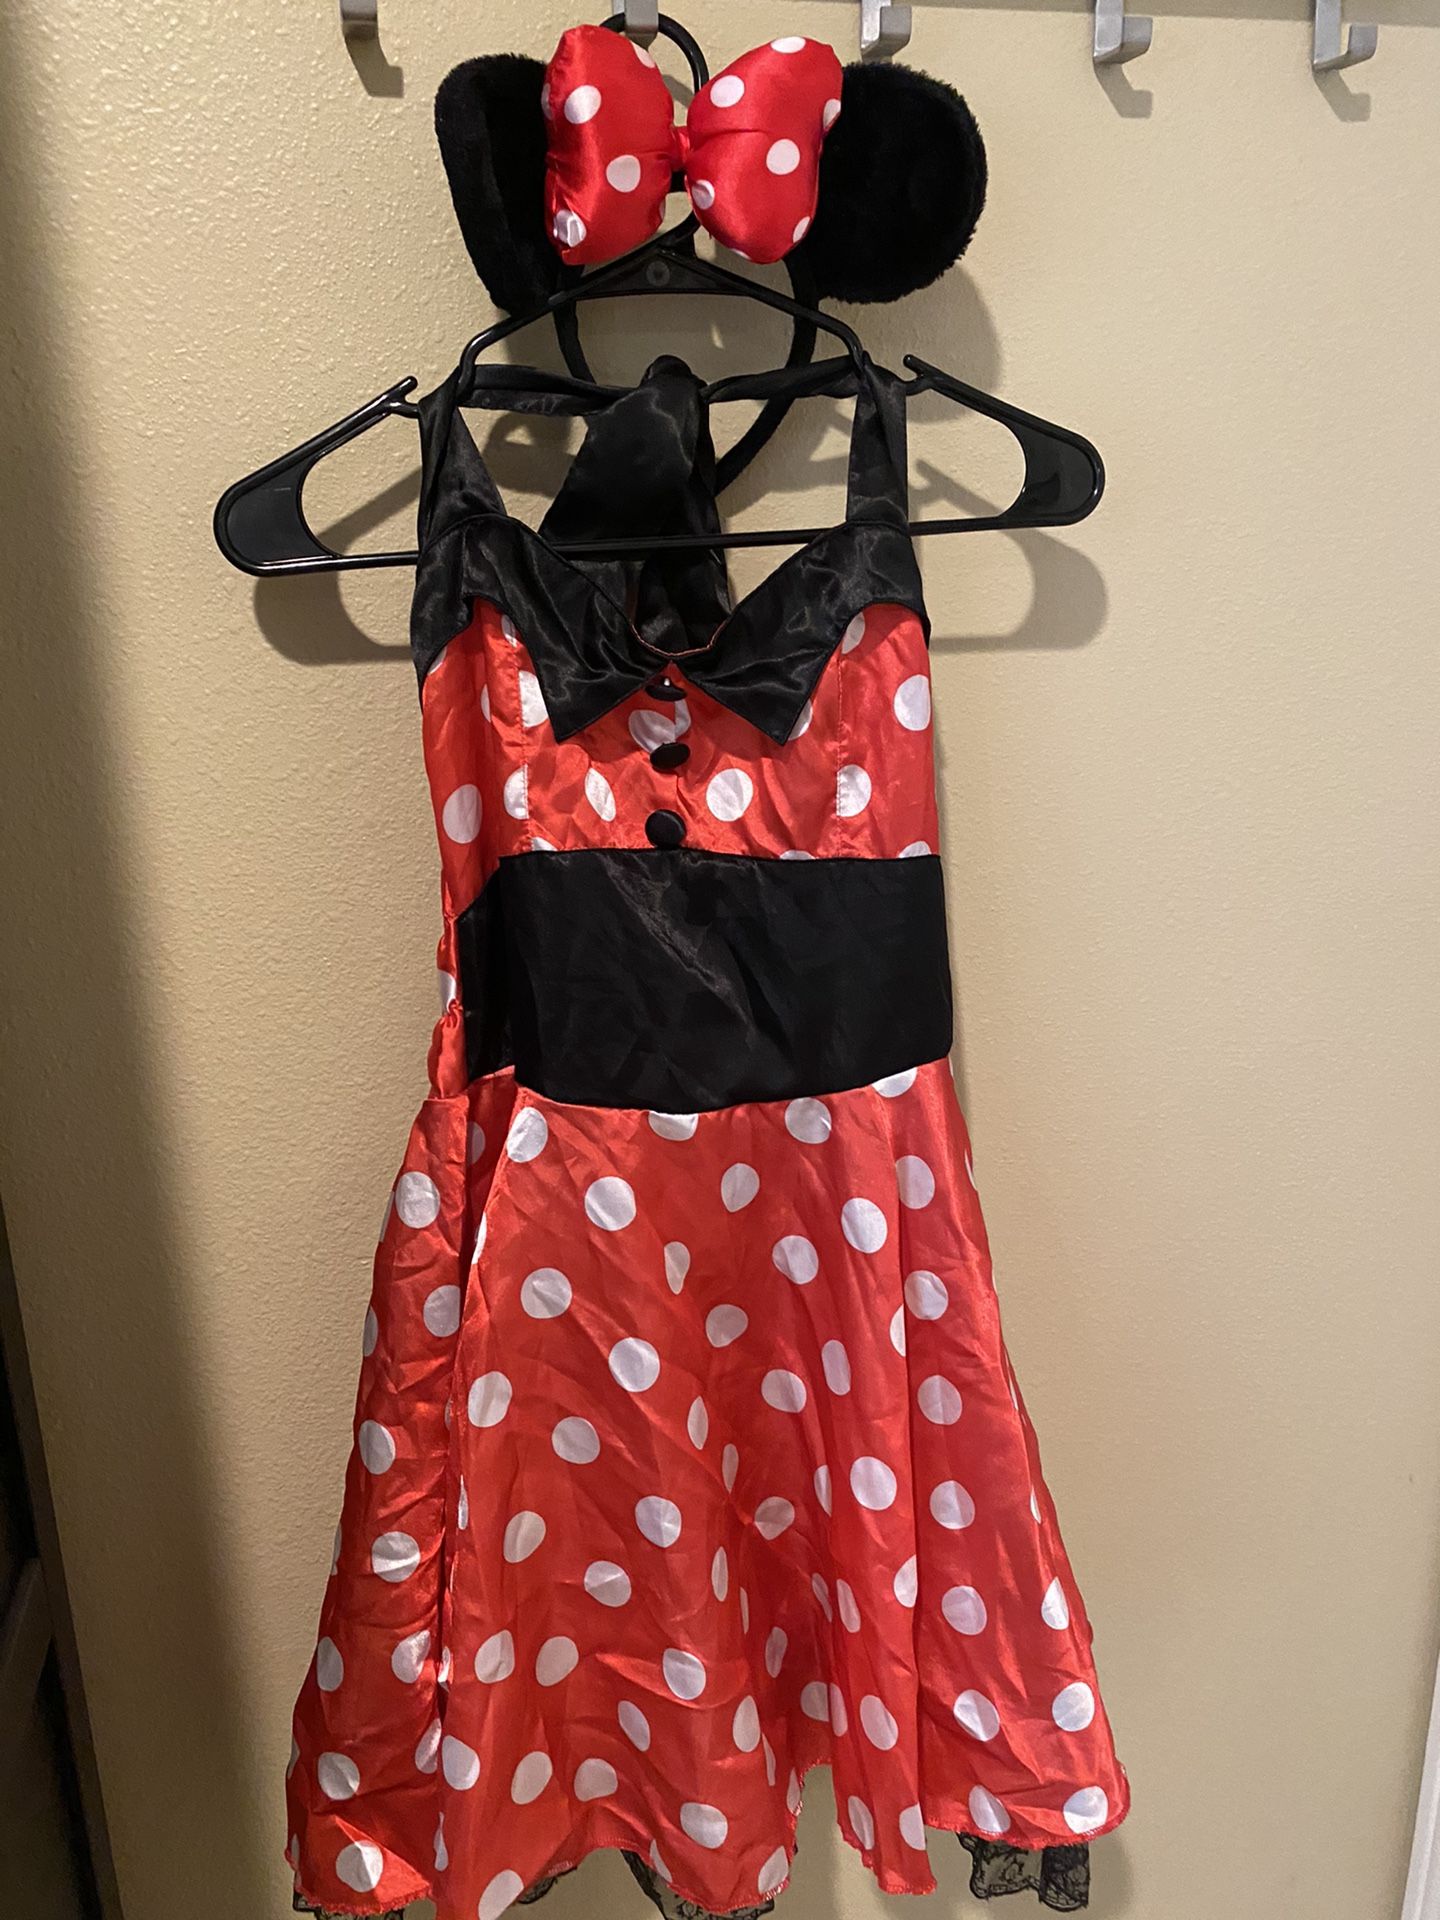 Minnie Mouse Costume - size small/medium